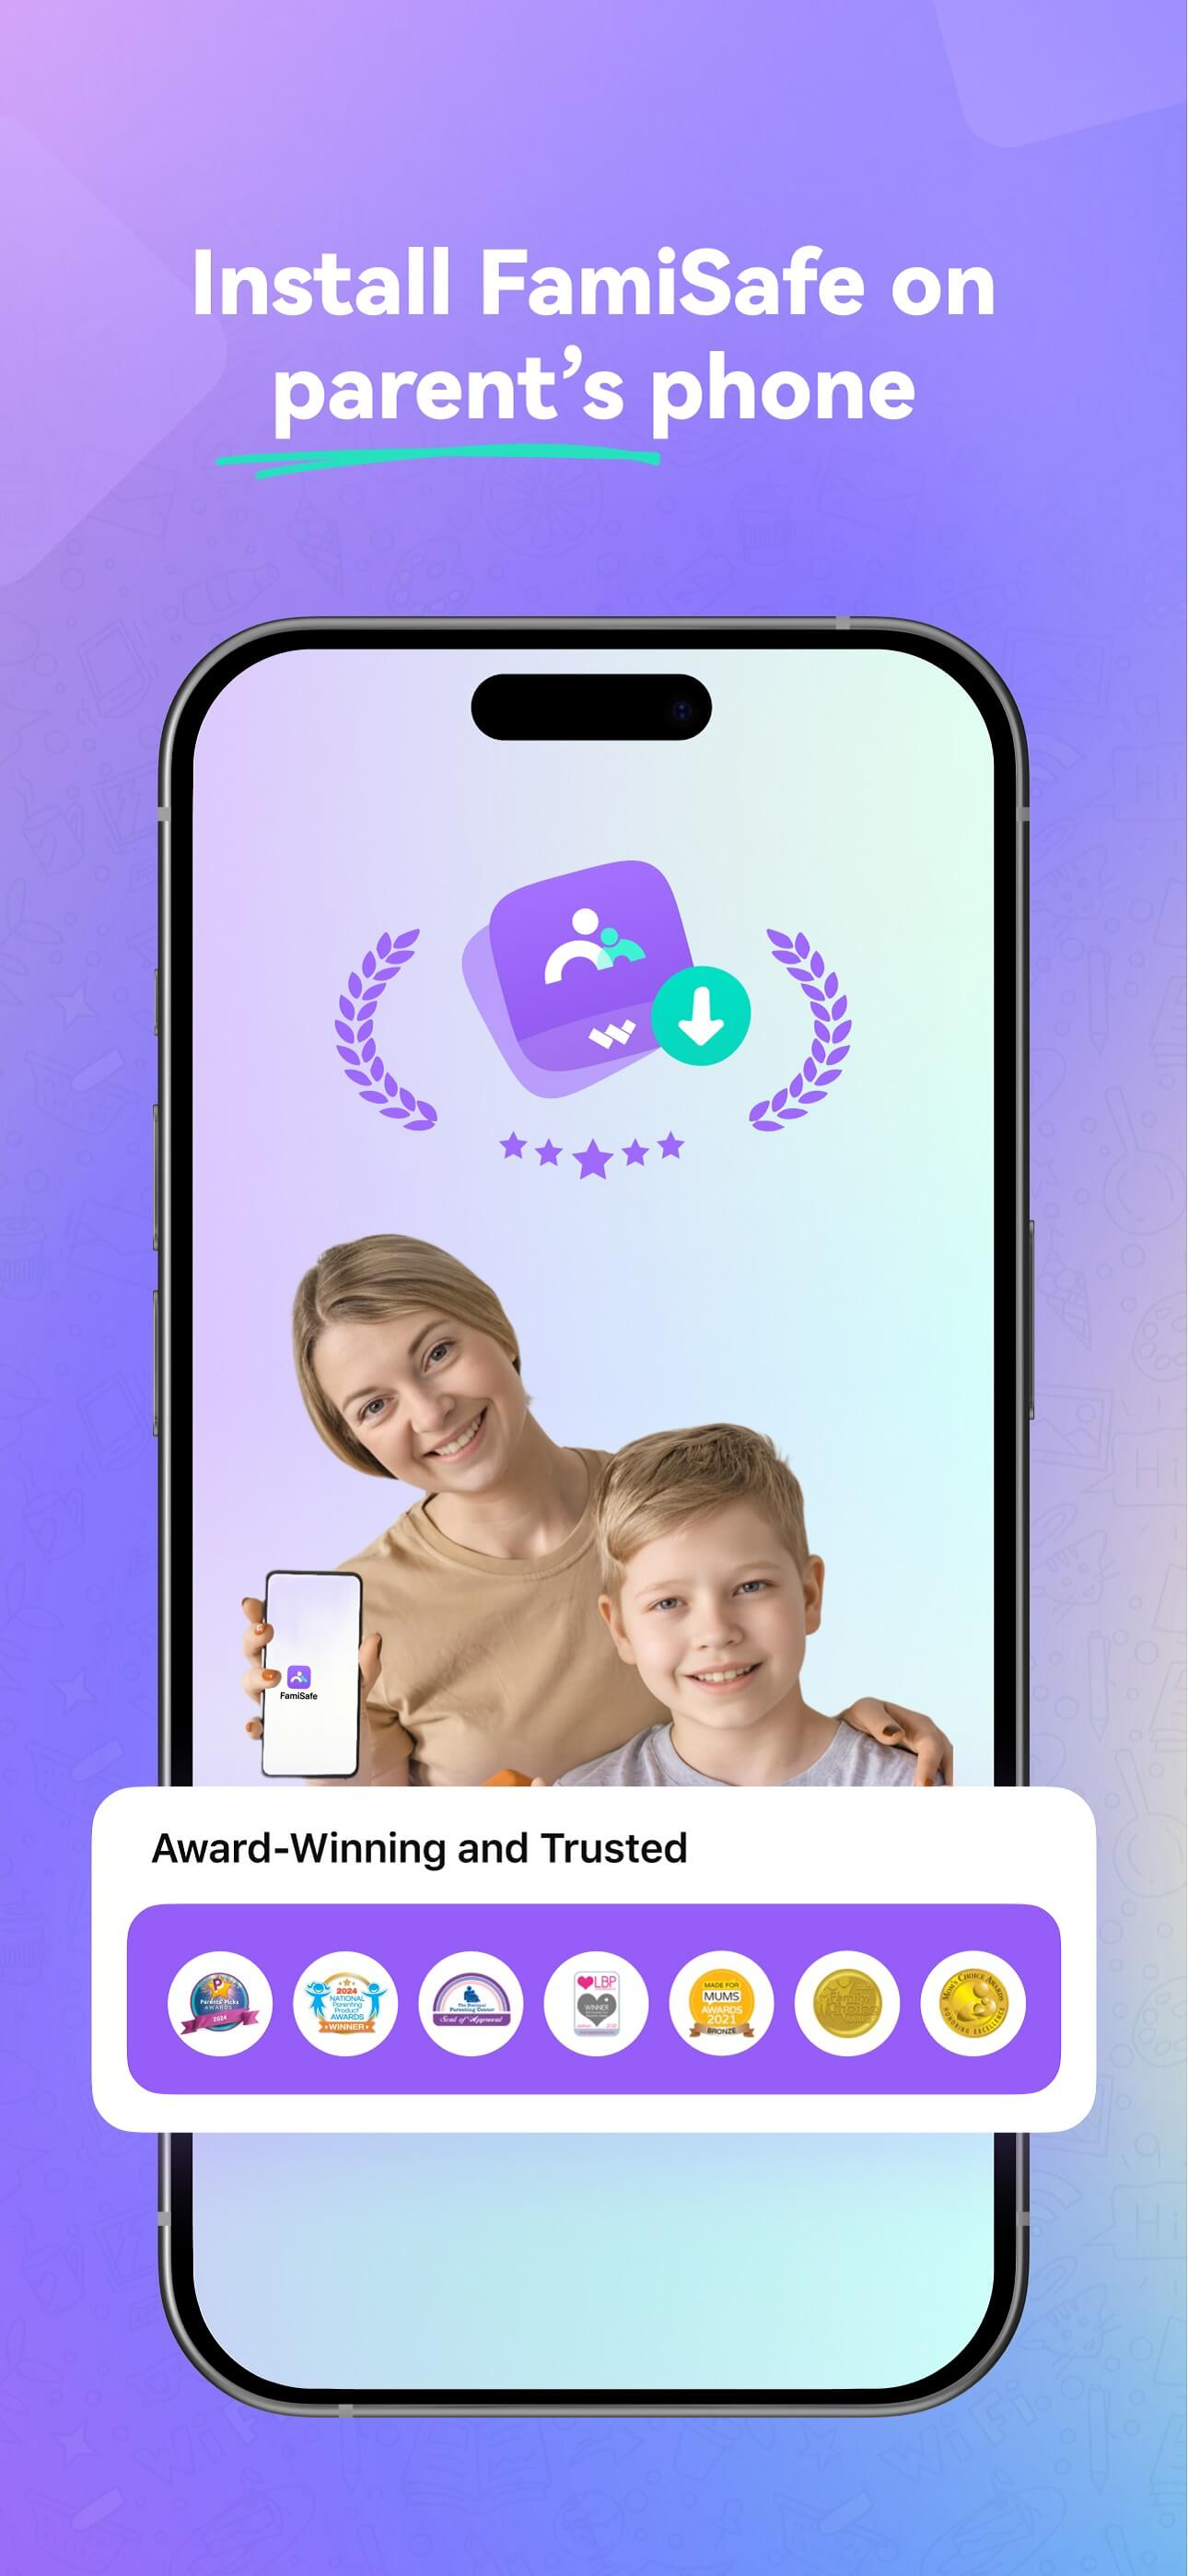 Parental Control App- FamiSafe